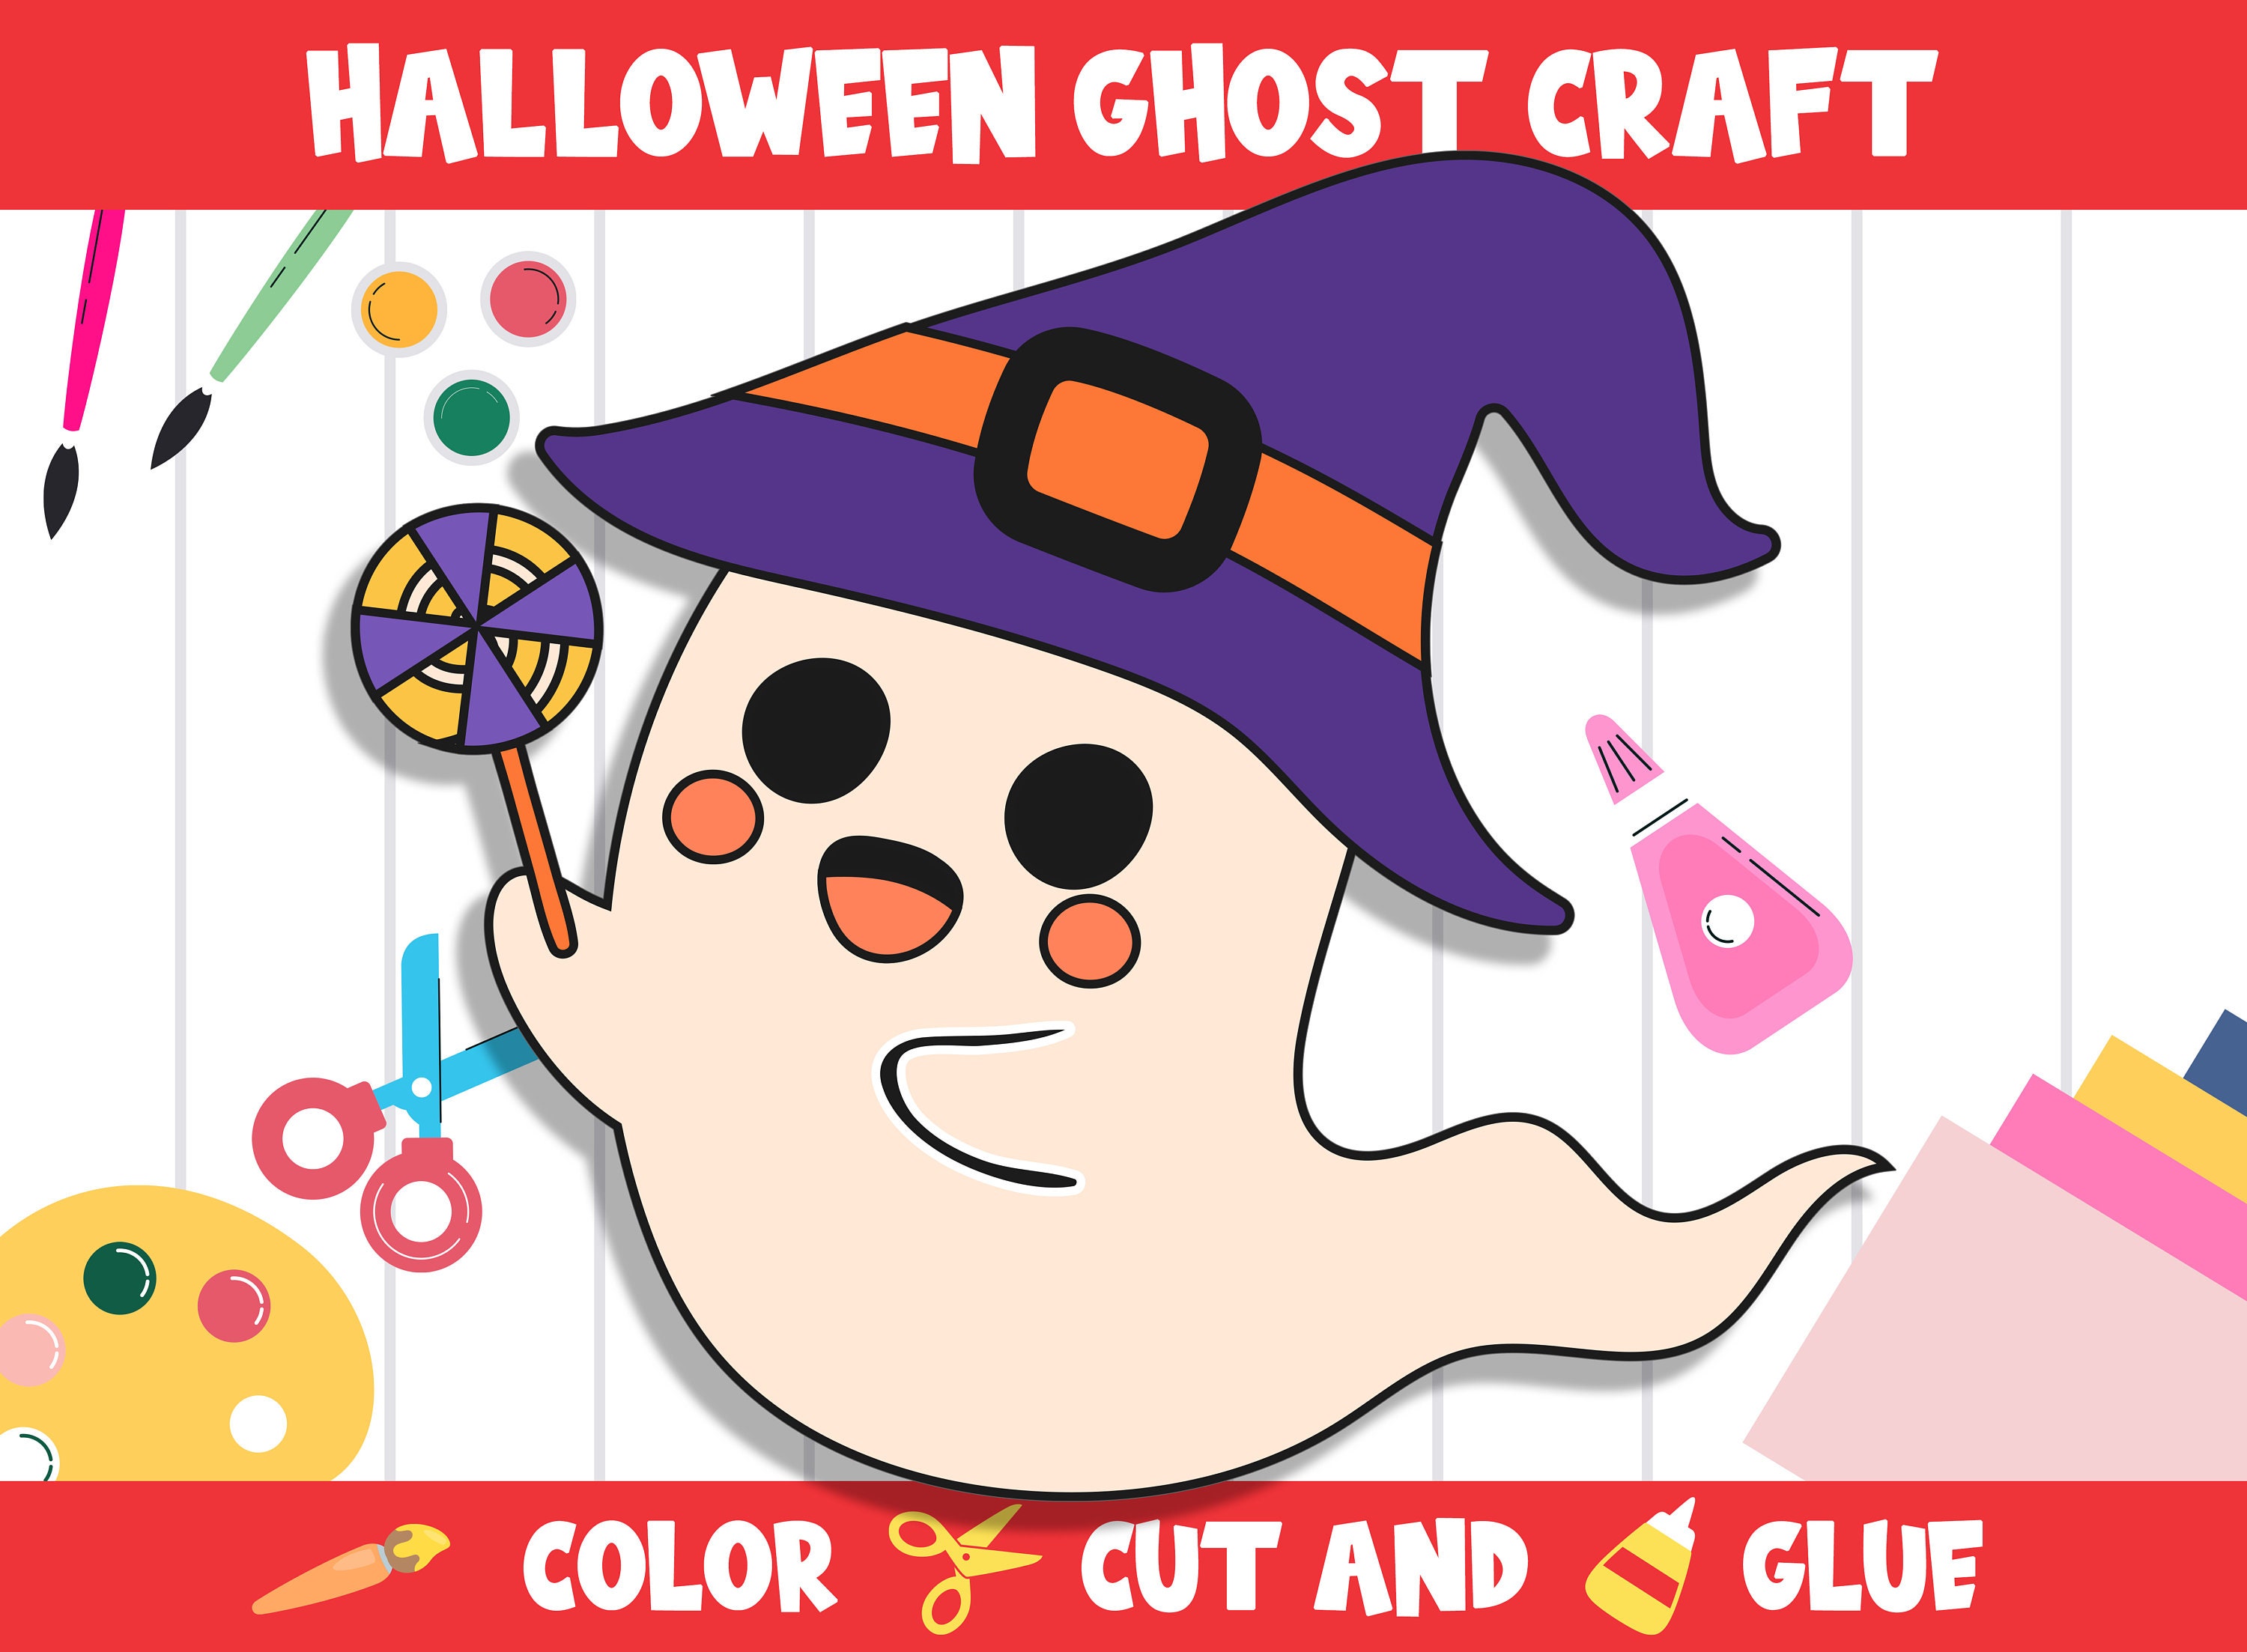 Glue ghosts {Halloween fine motor craft for kids} - Gift of Curiosity